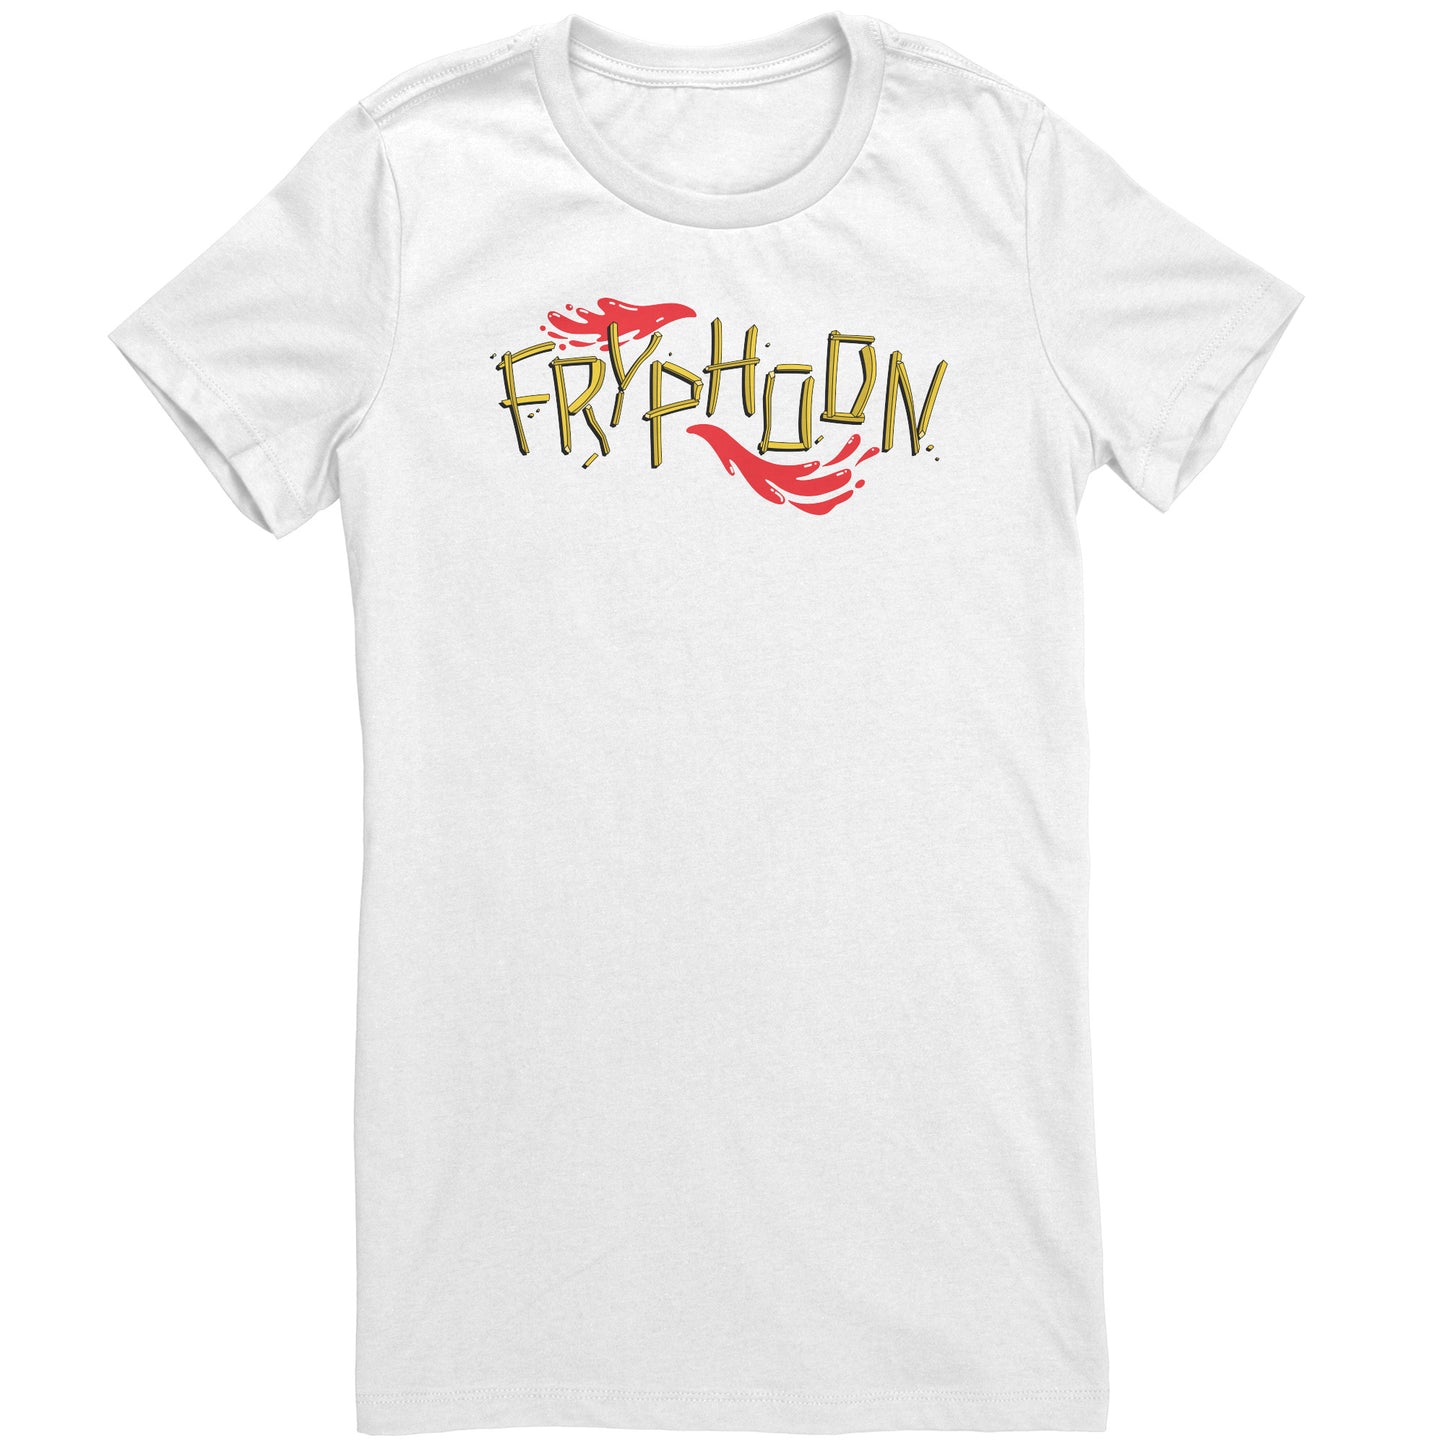 Fryphoon t-shirt